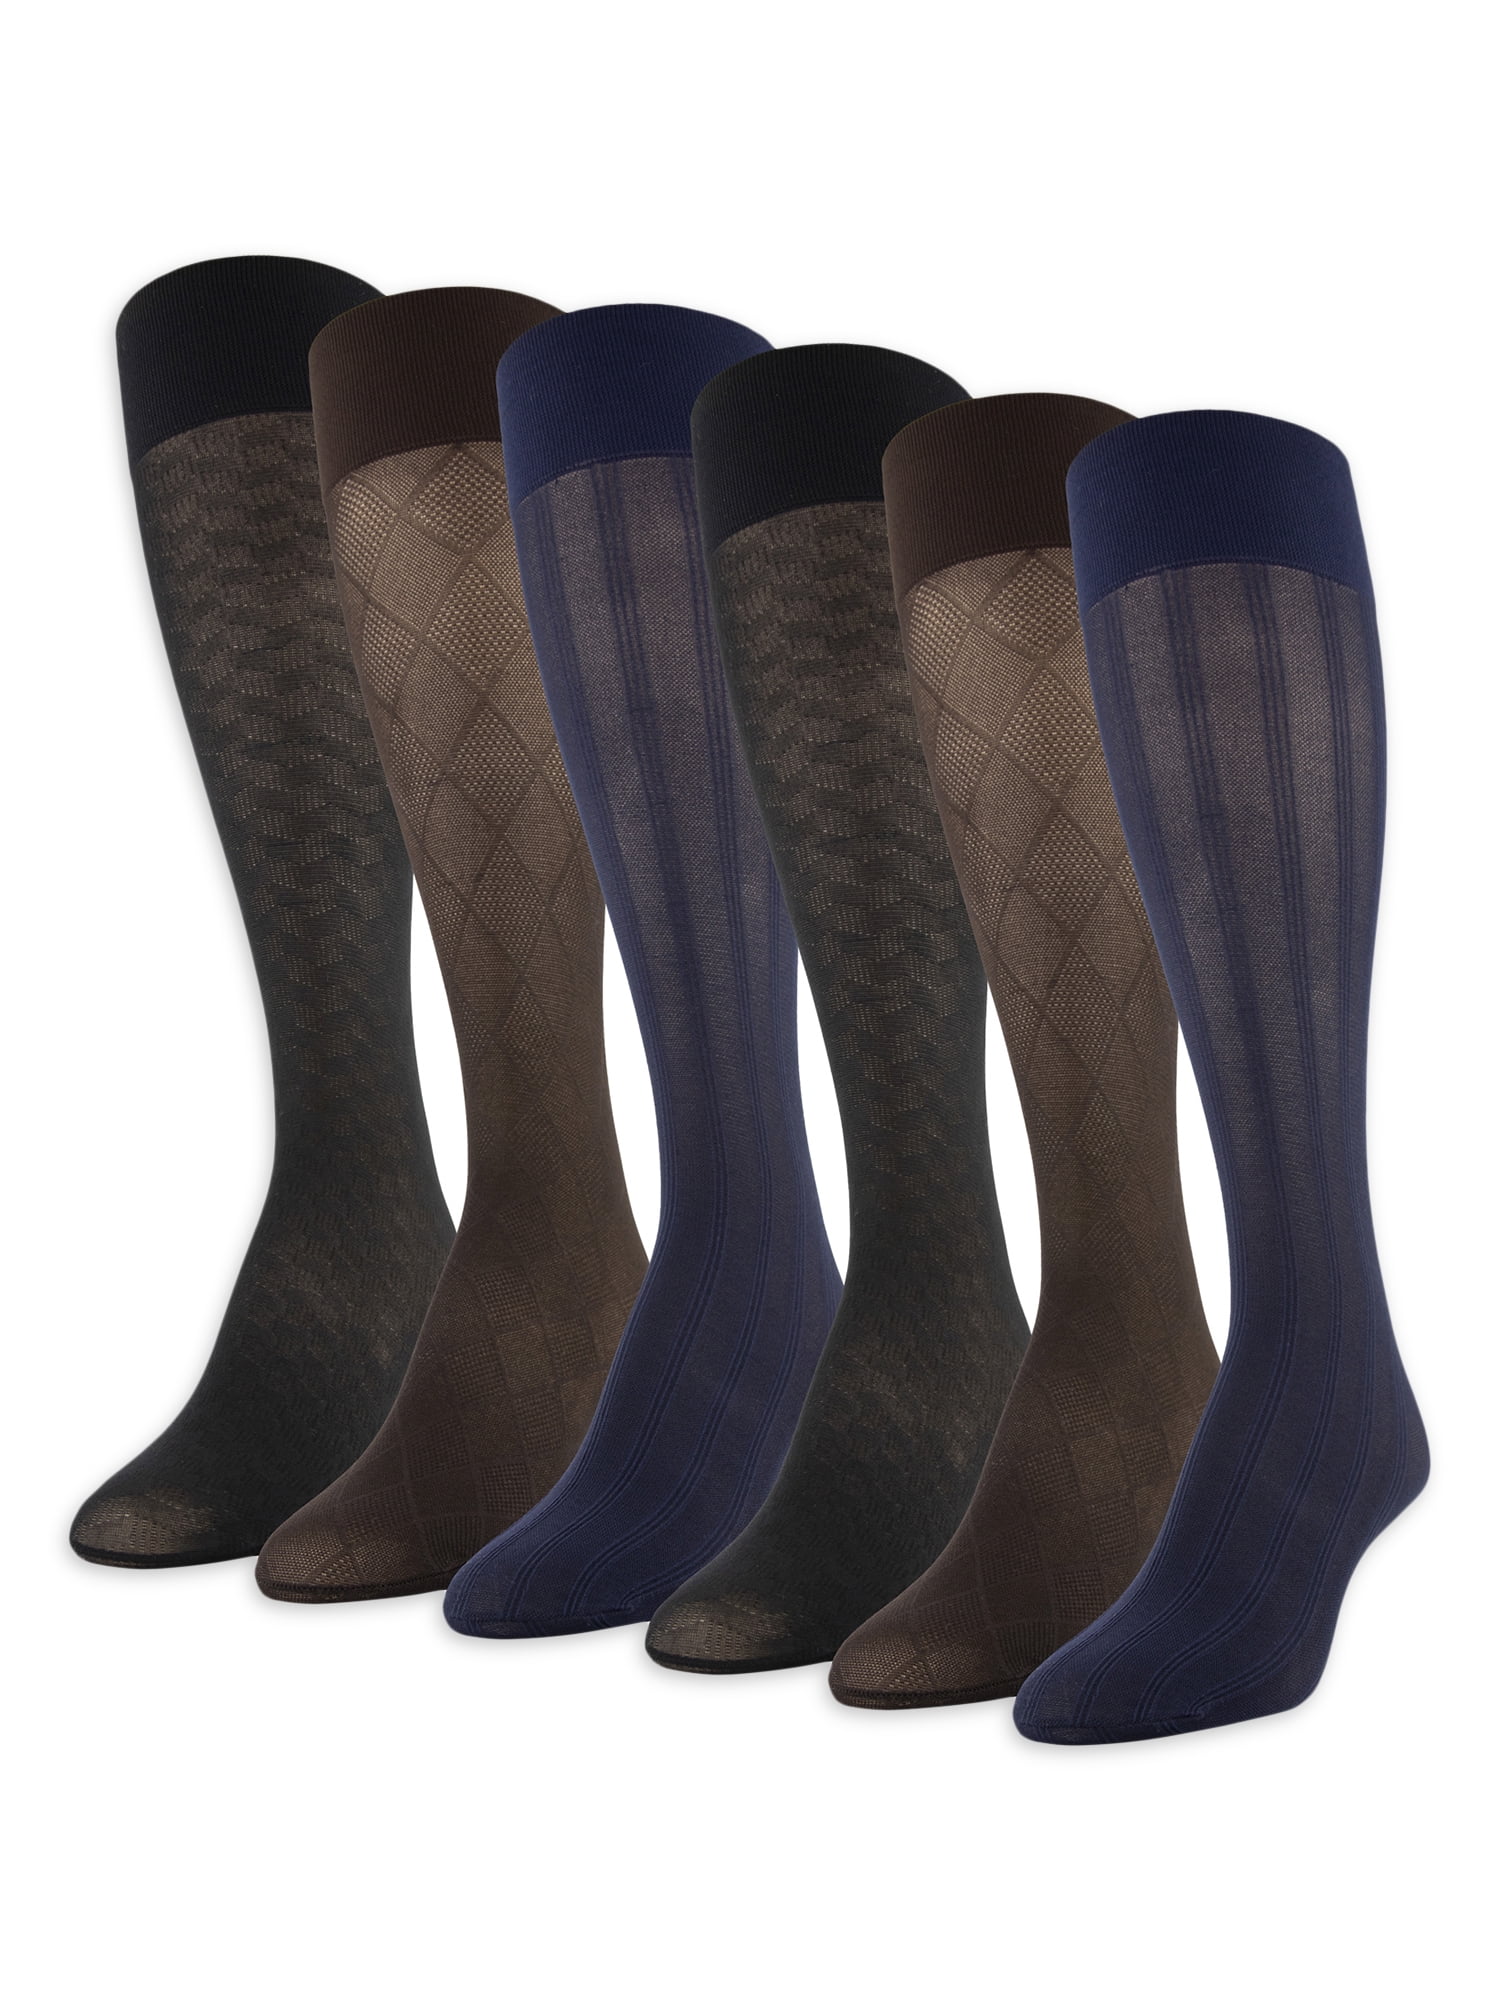 Peds Women's Trouser Socks, 6 Pairs - Walmart.com